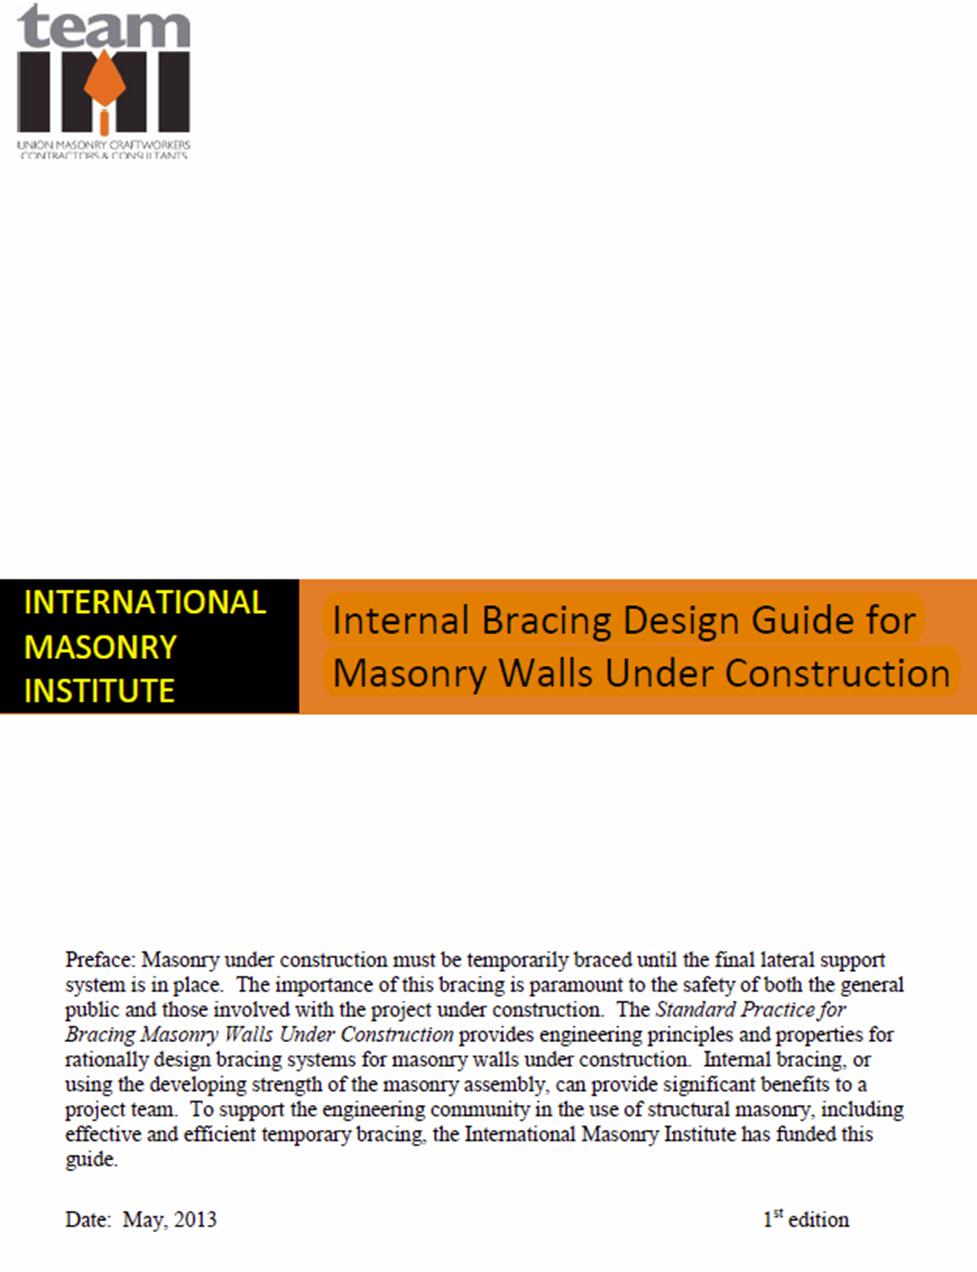 IMI Develops New Internal Bracing Guide